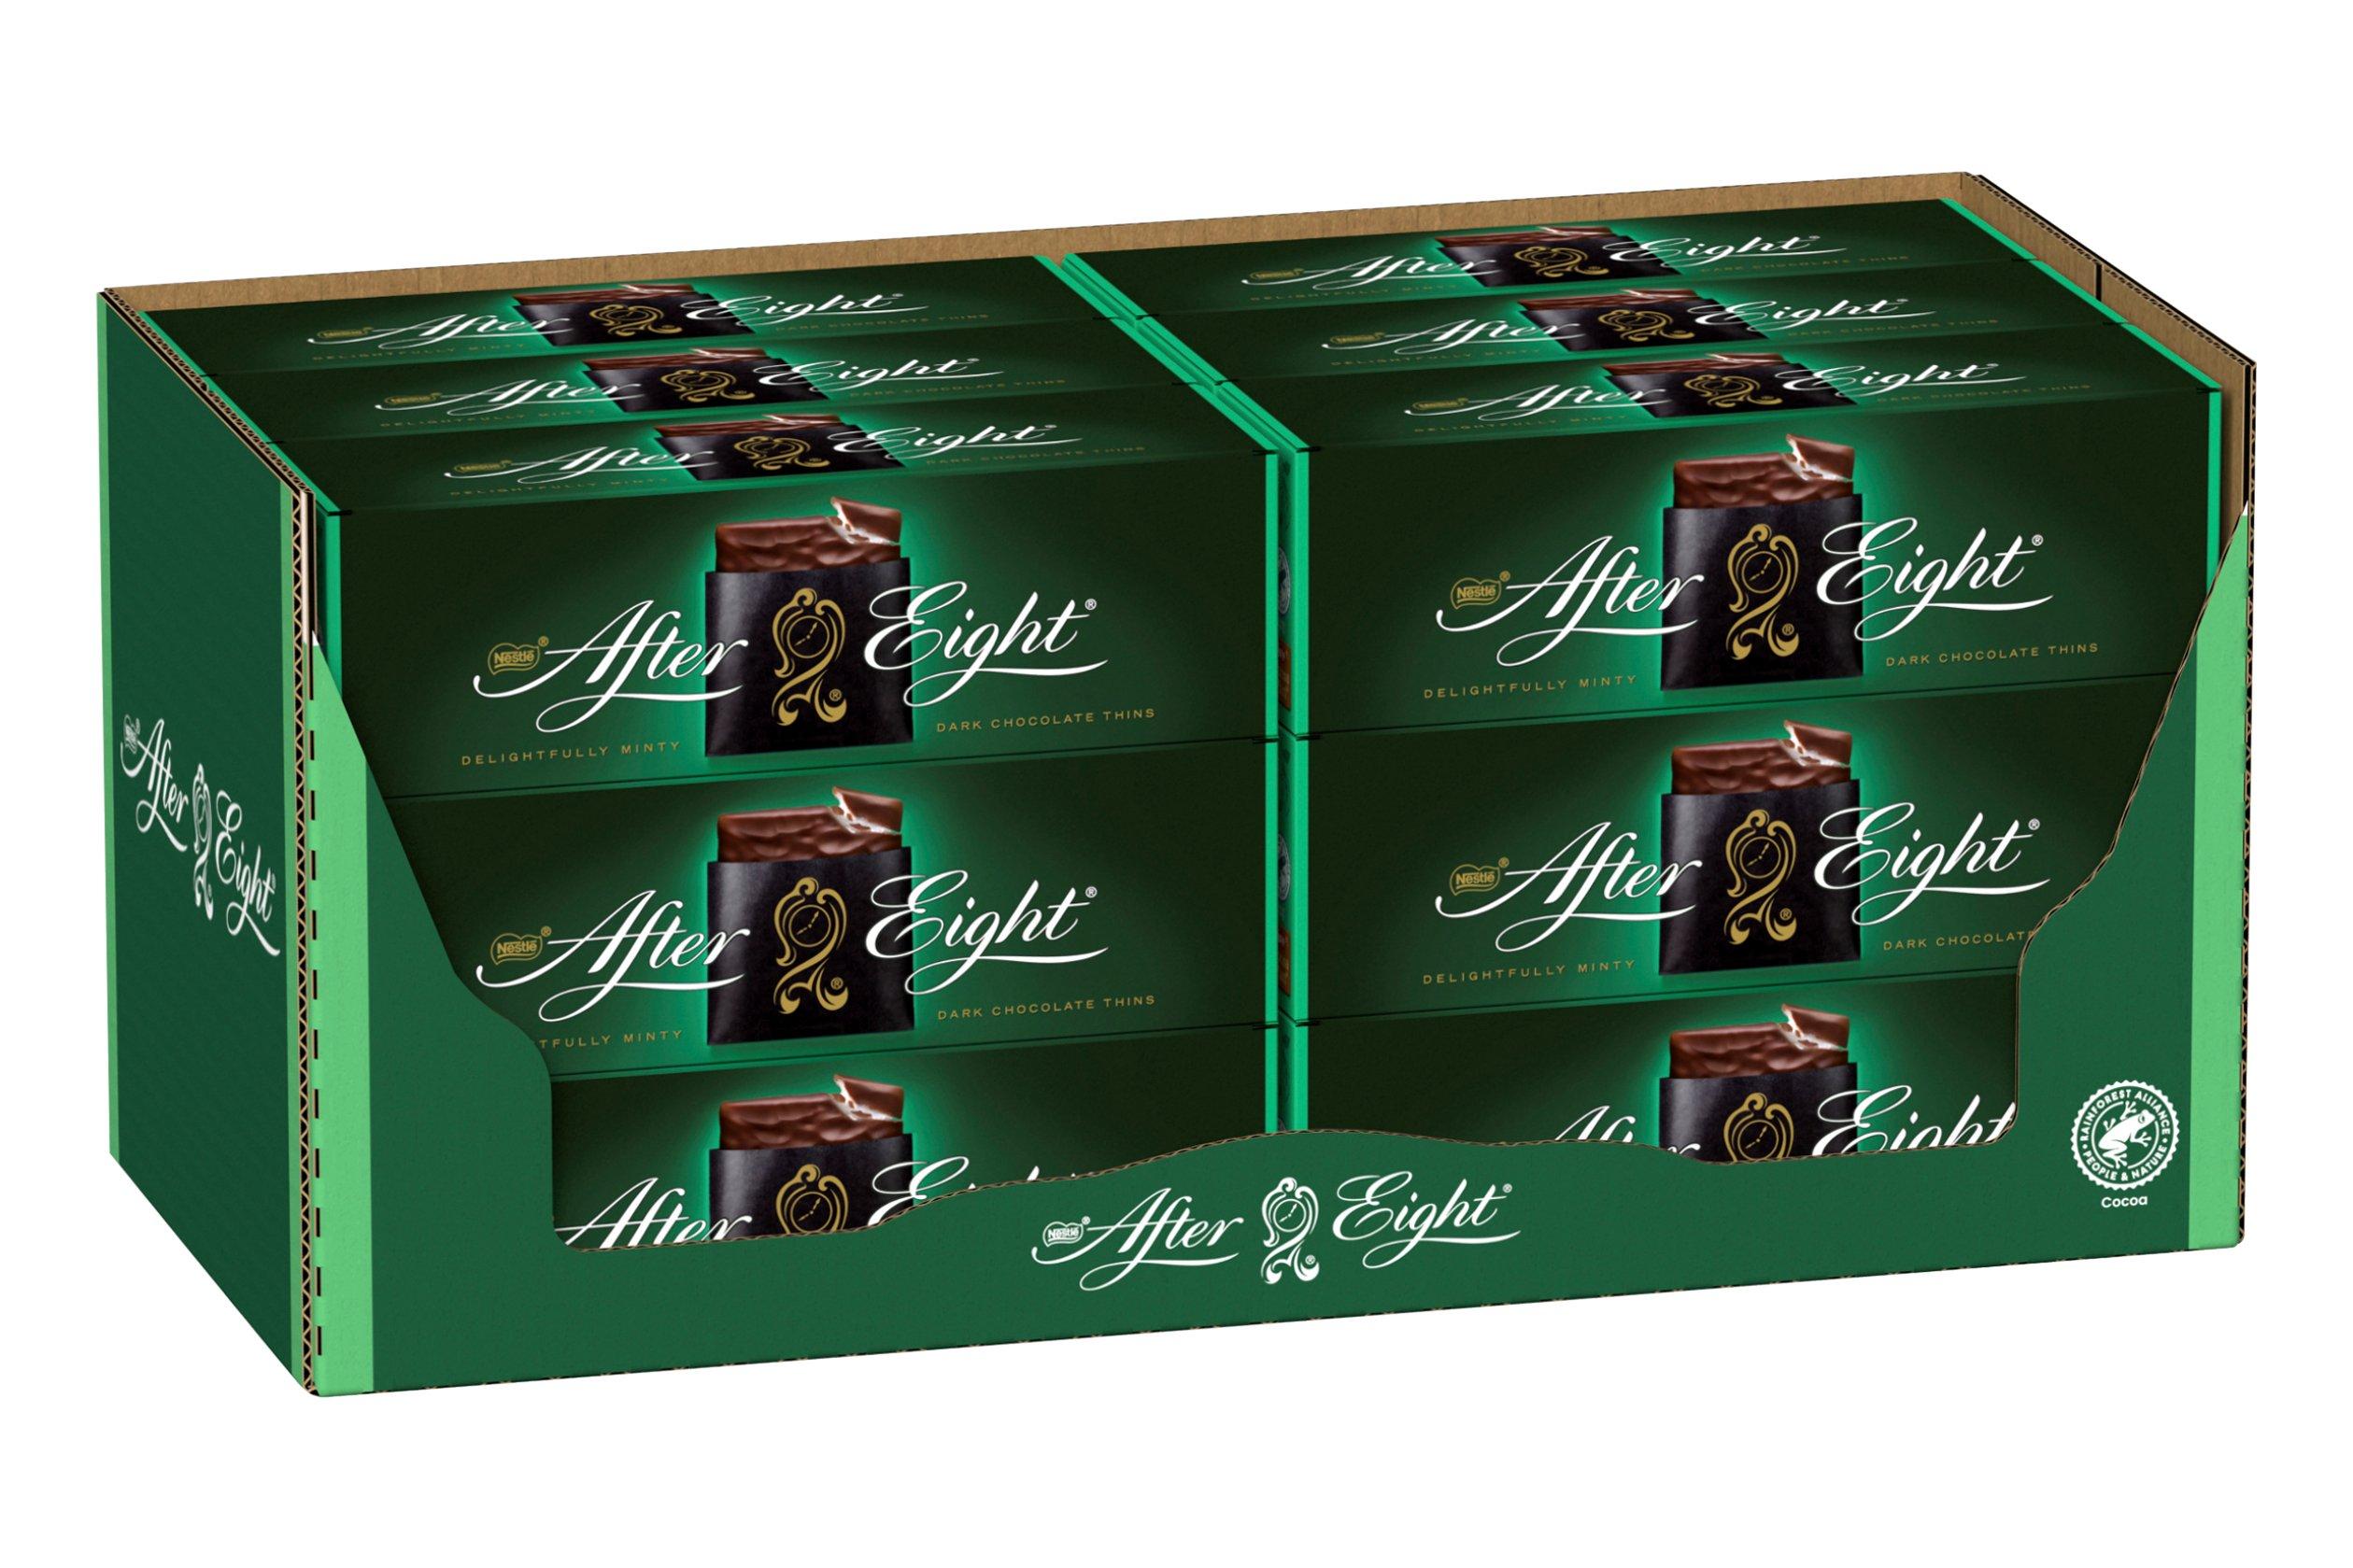 After Eight Dark Mint Chocolate Carton Box 300g Wholesale – Buy After Eight  Dark Mint Chocolate Carton Box 300g in Bulk